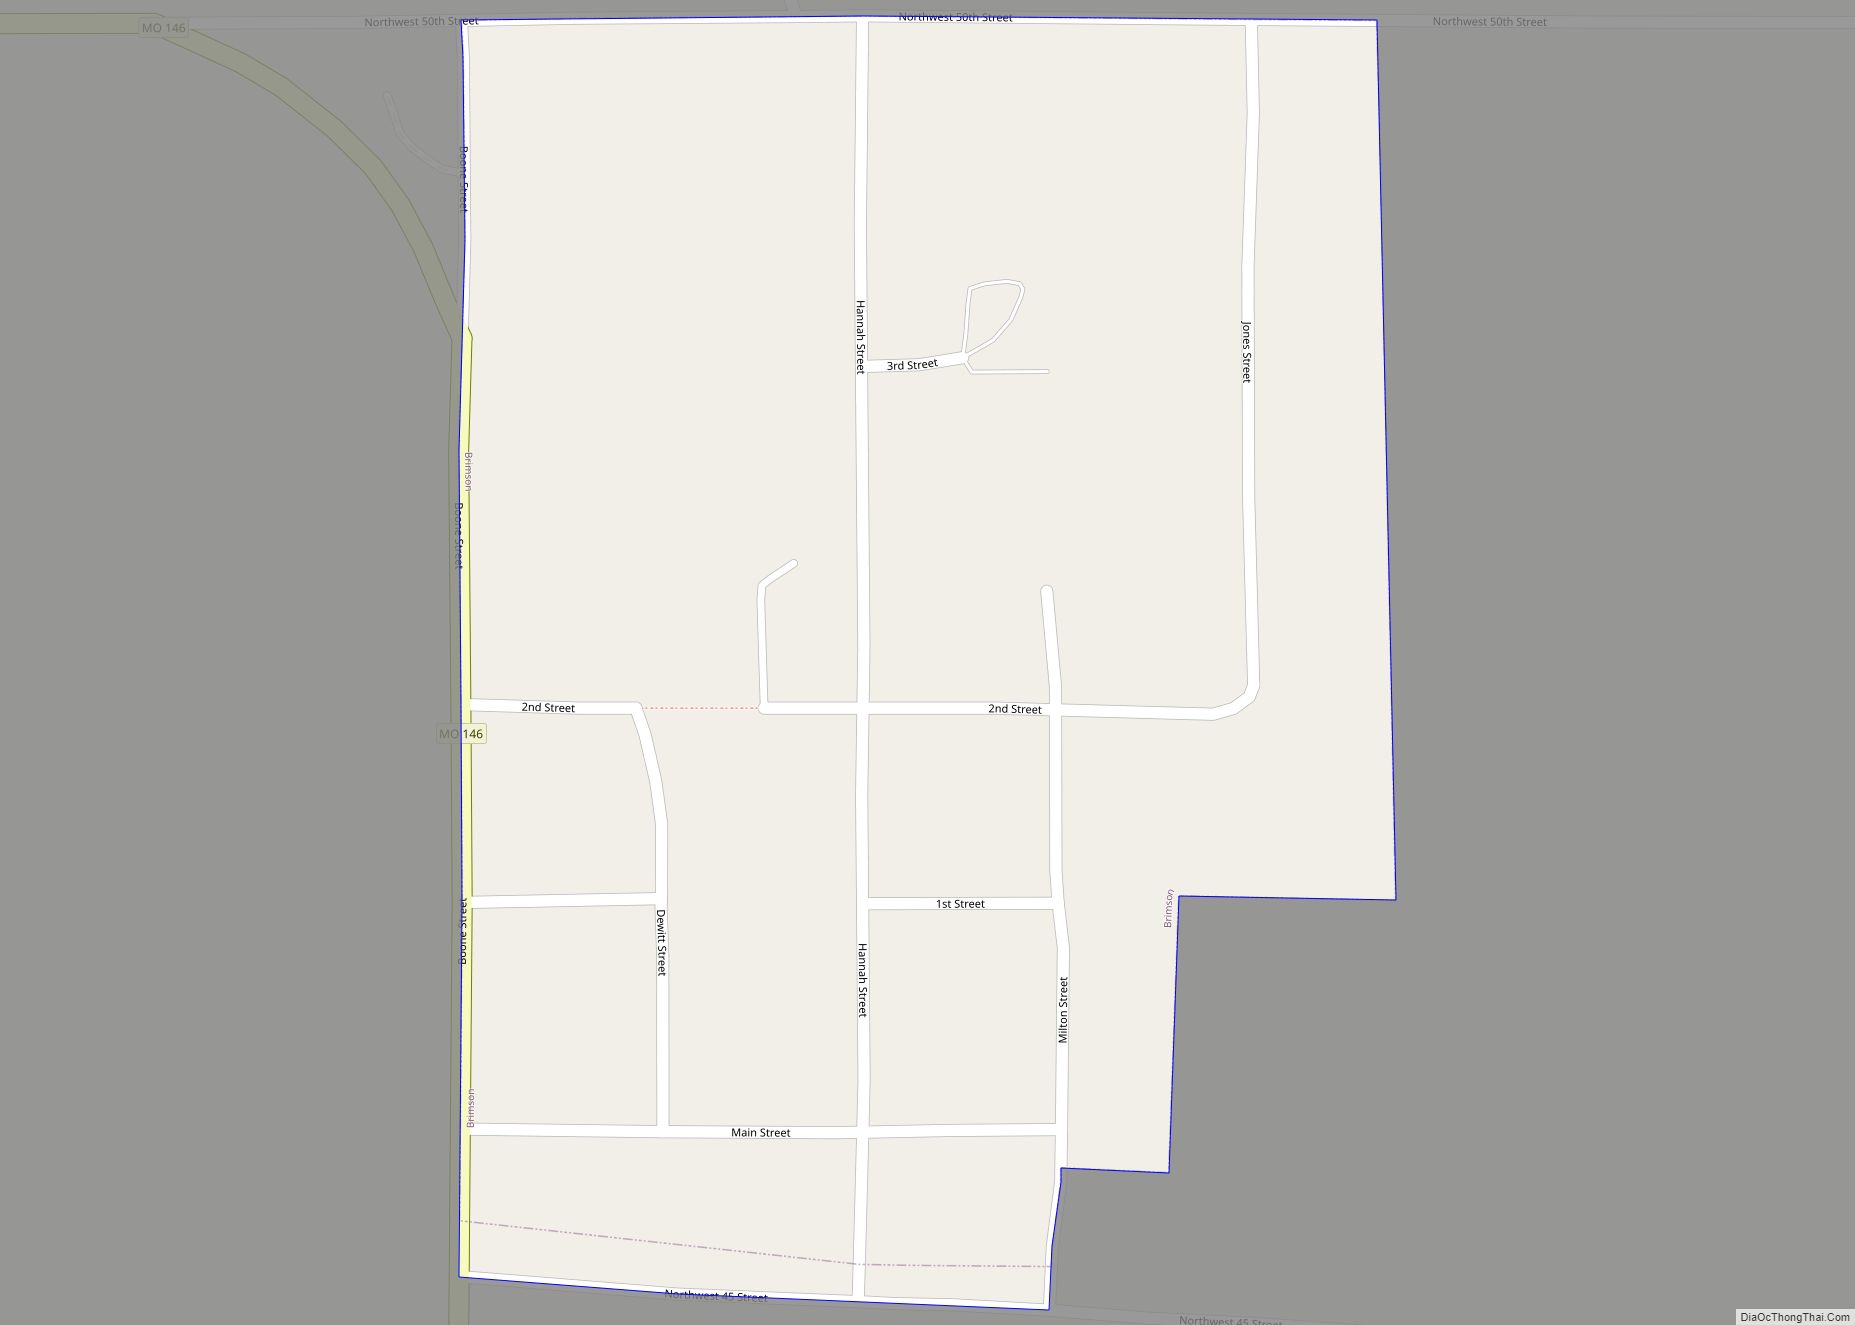 Map of Brimson village